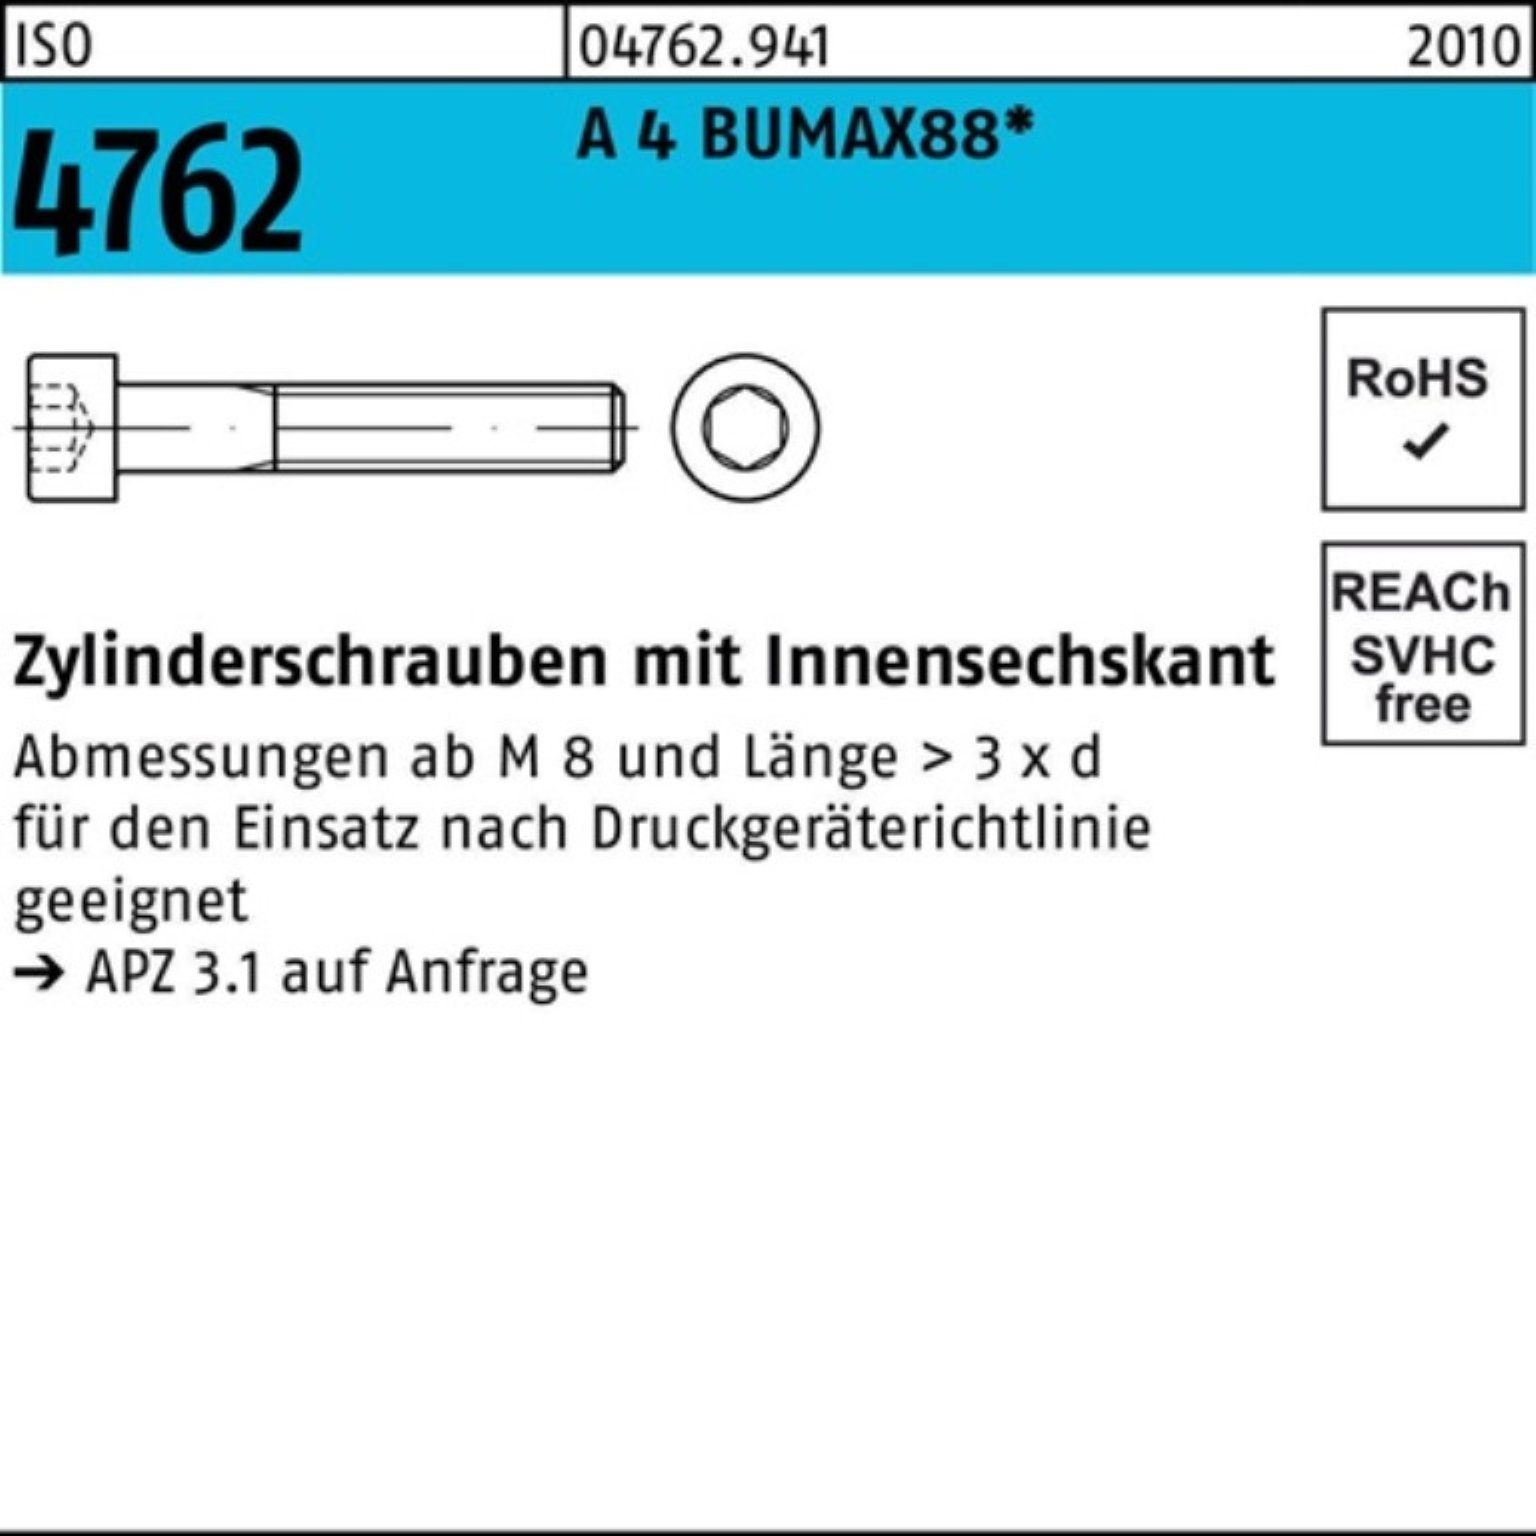 Bufab Zylinderschraube 100er Pack Zylinderschraube ISO 4762 Innen-6kt M16x 35 A 4 BUMAX88 25